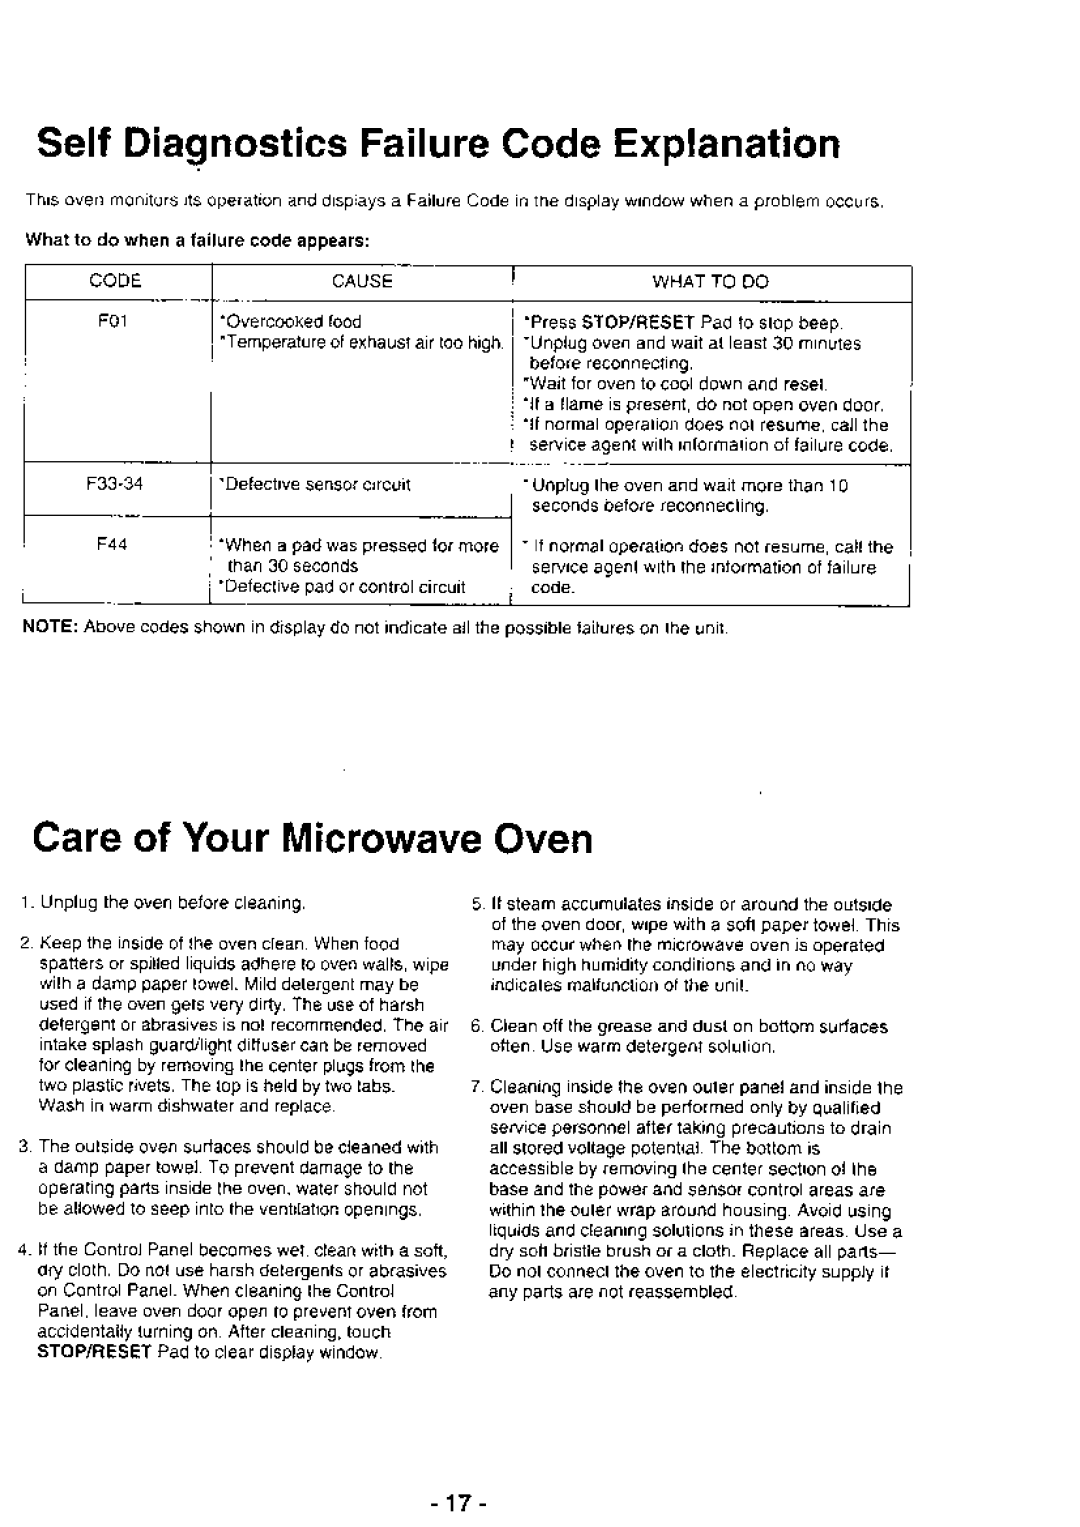 Panasonic NE-1064 manual Careof YourMicrowaveOven, $elf DiagnosticsFailureCodeExplanation 